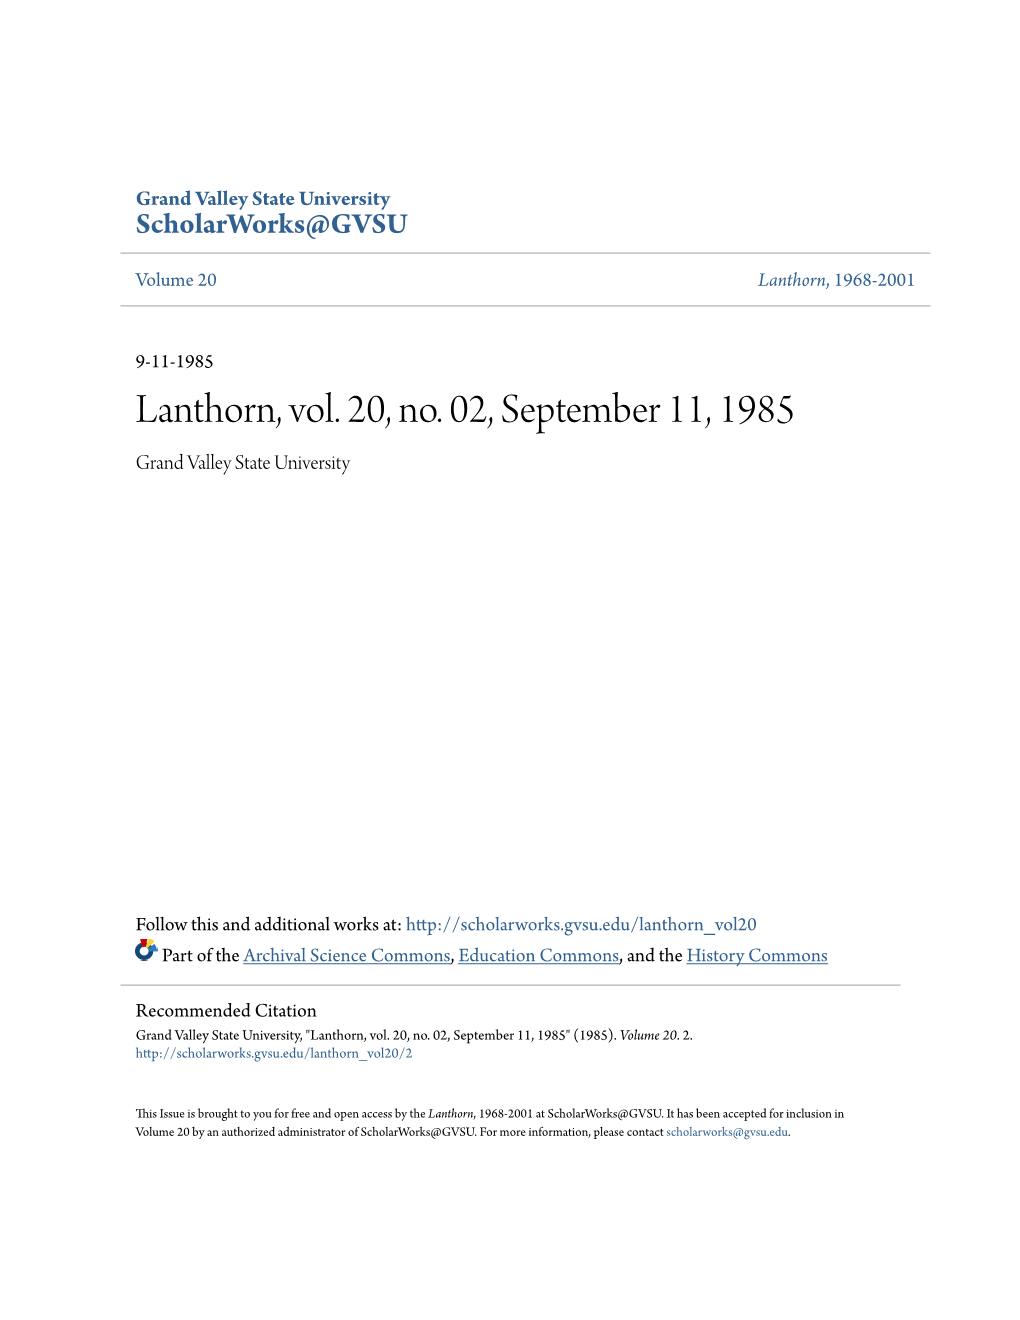 Lanthorn, Vol. 20, No. 02, September 11, 1985 Grand Valley State University